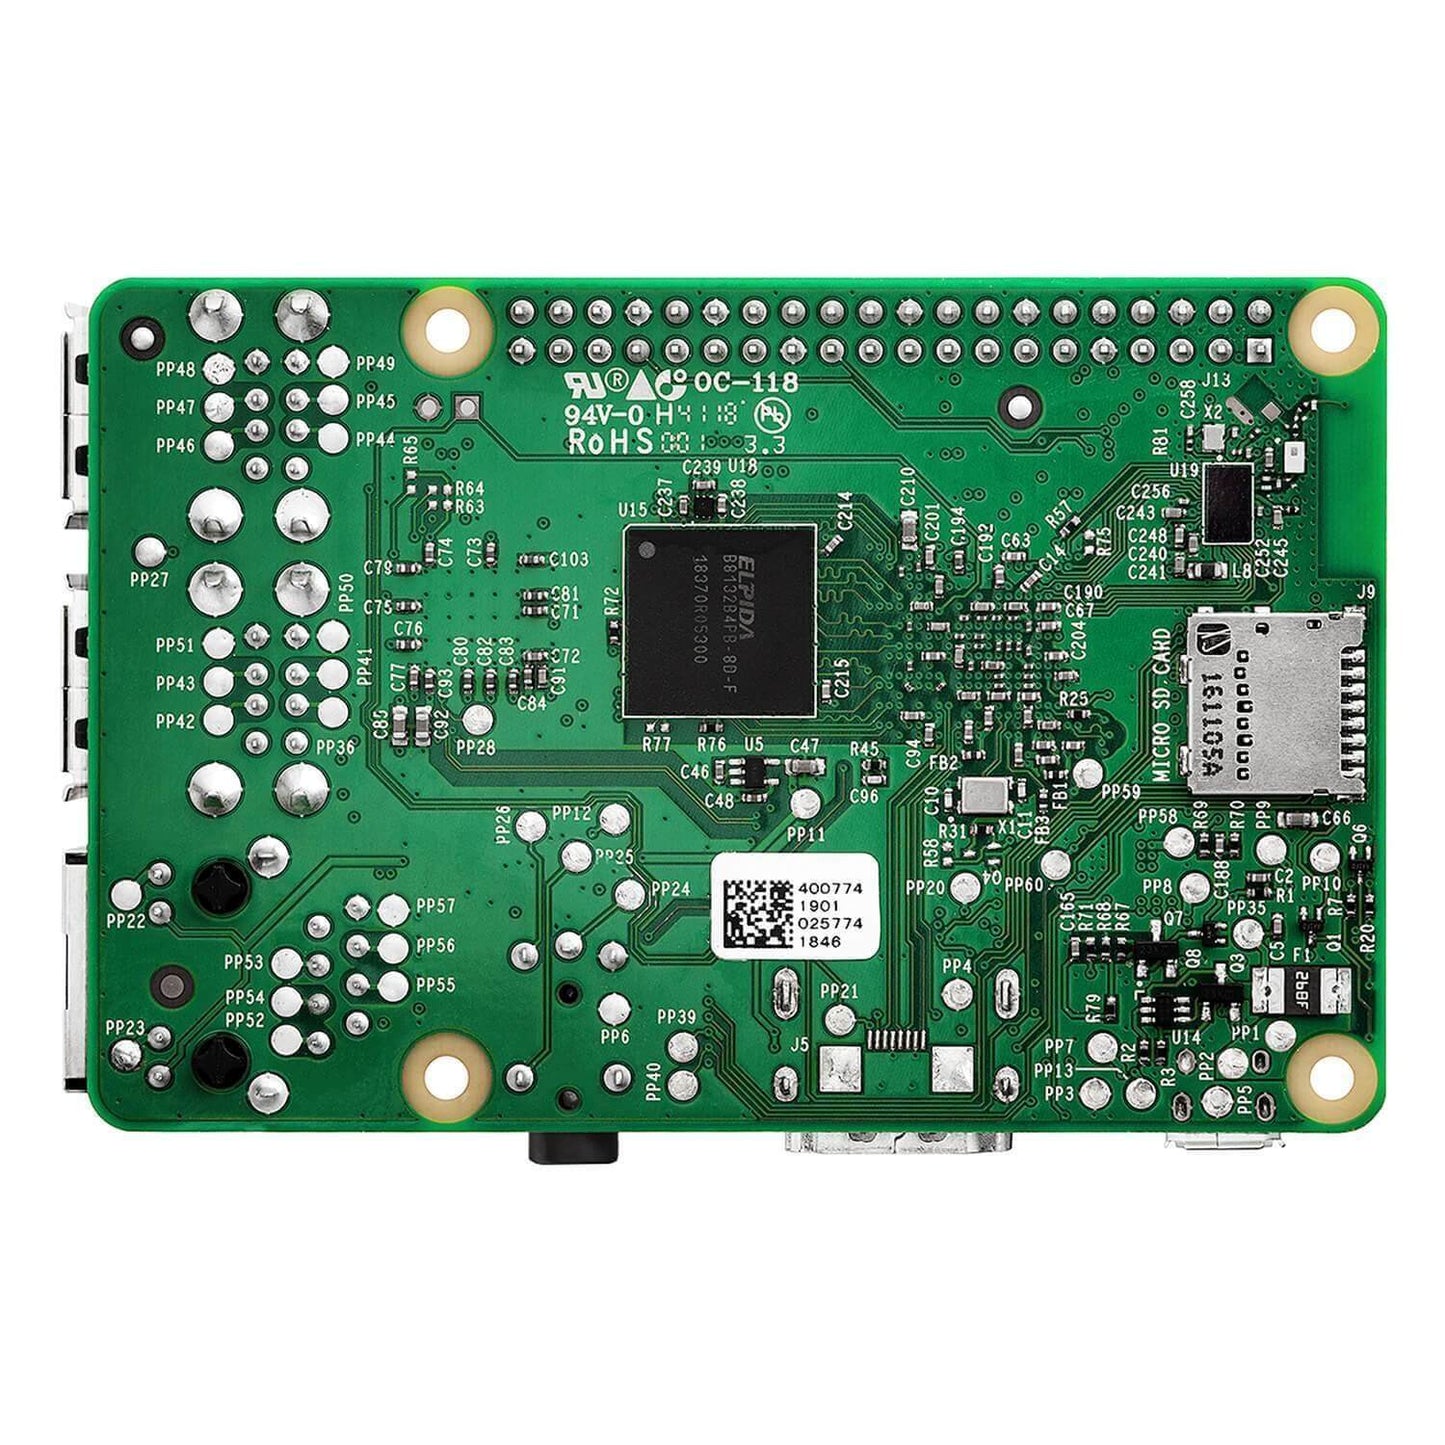 Raspberry Pi 3 Model Modell B ARM-Cor­tex-A53 4x 1,2GHz, 1GB RAM, WLAN, Bluetooth - Instock Germany